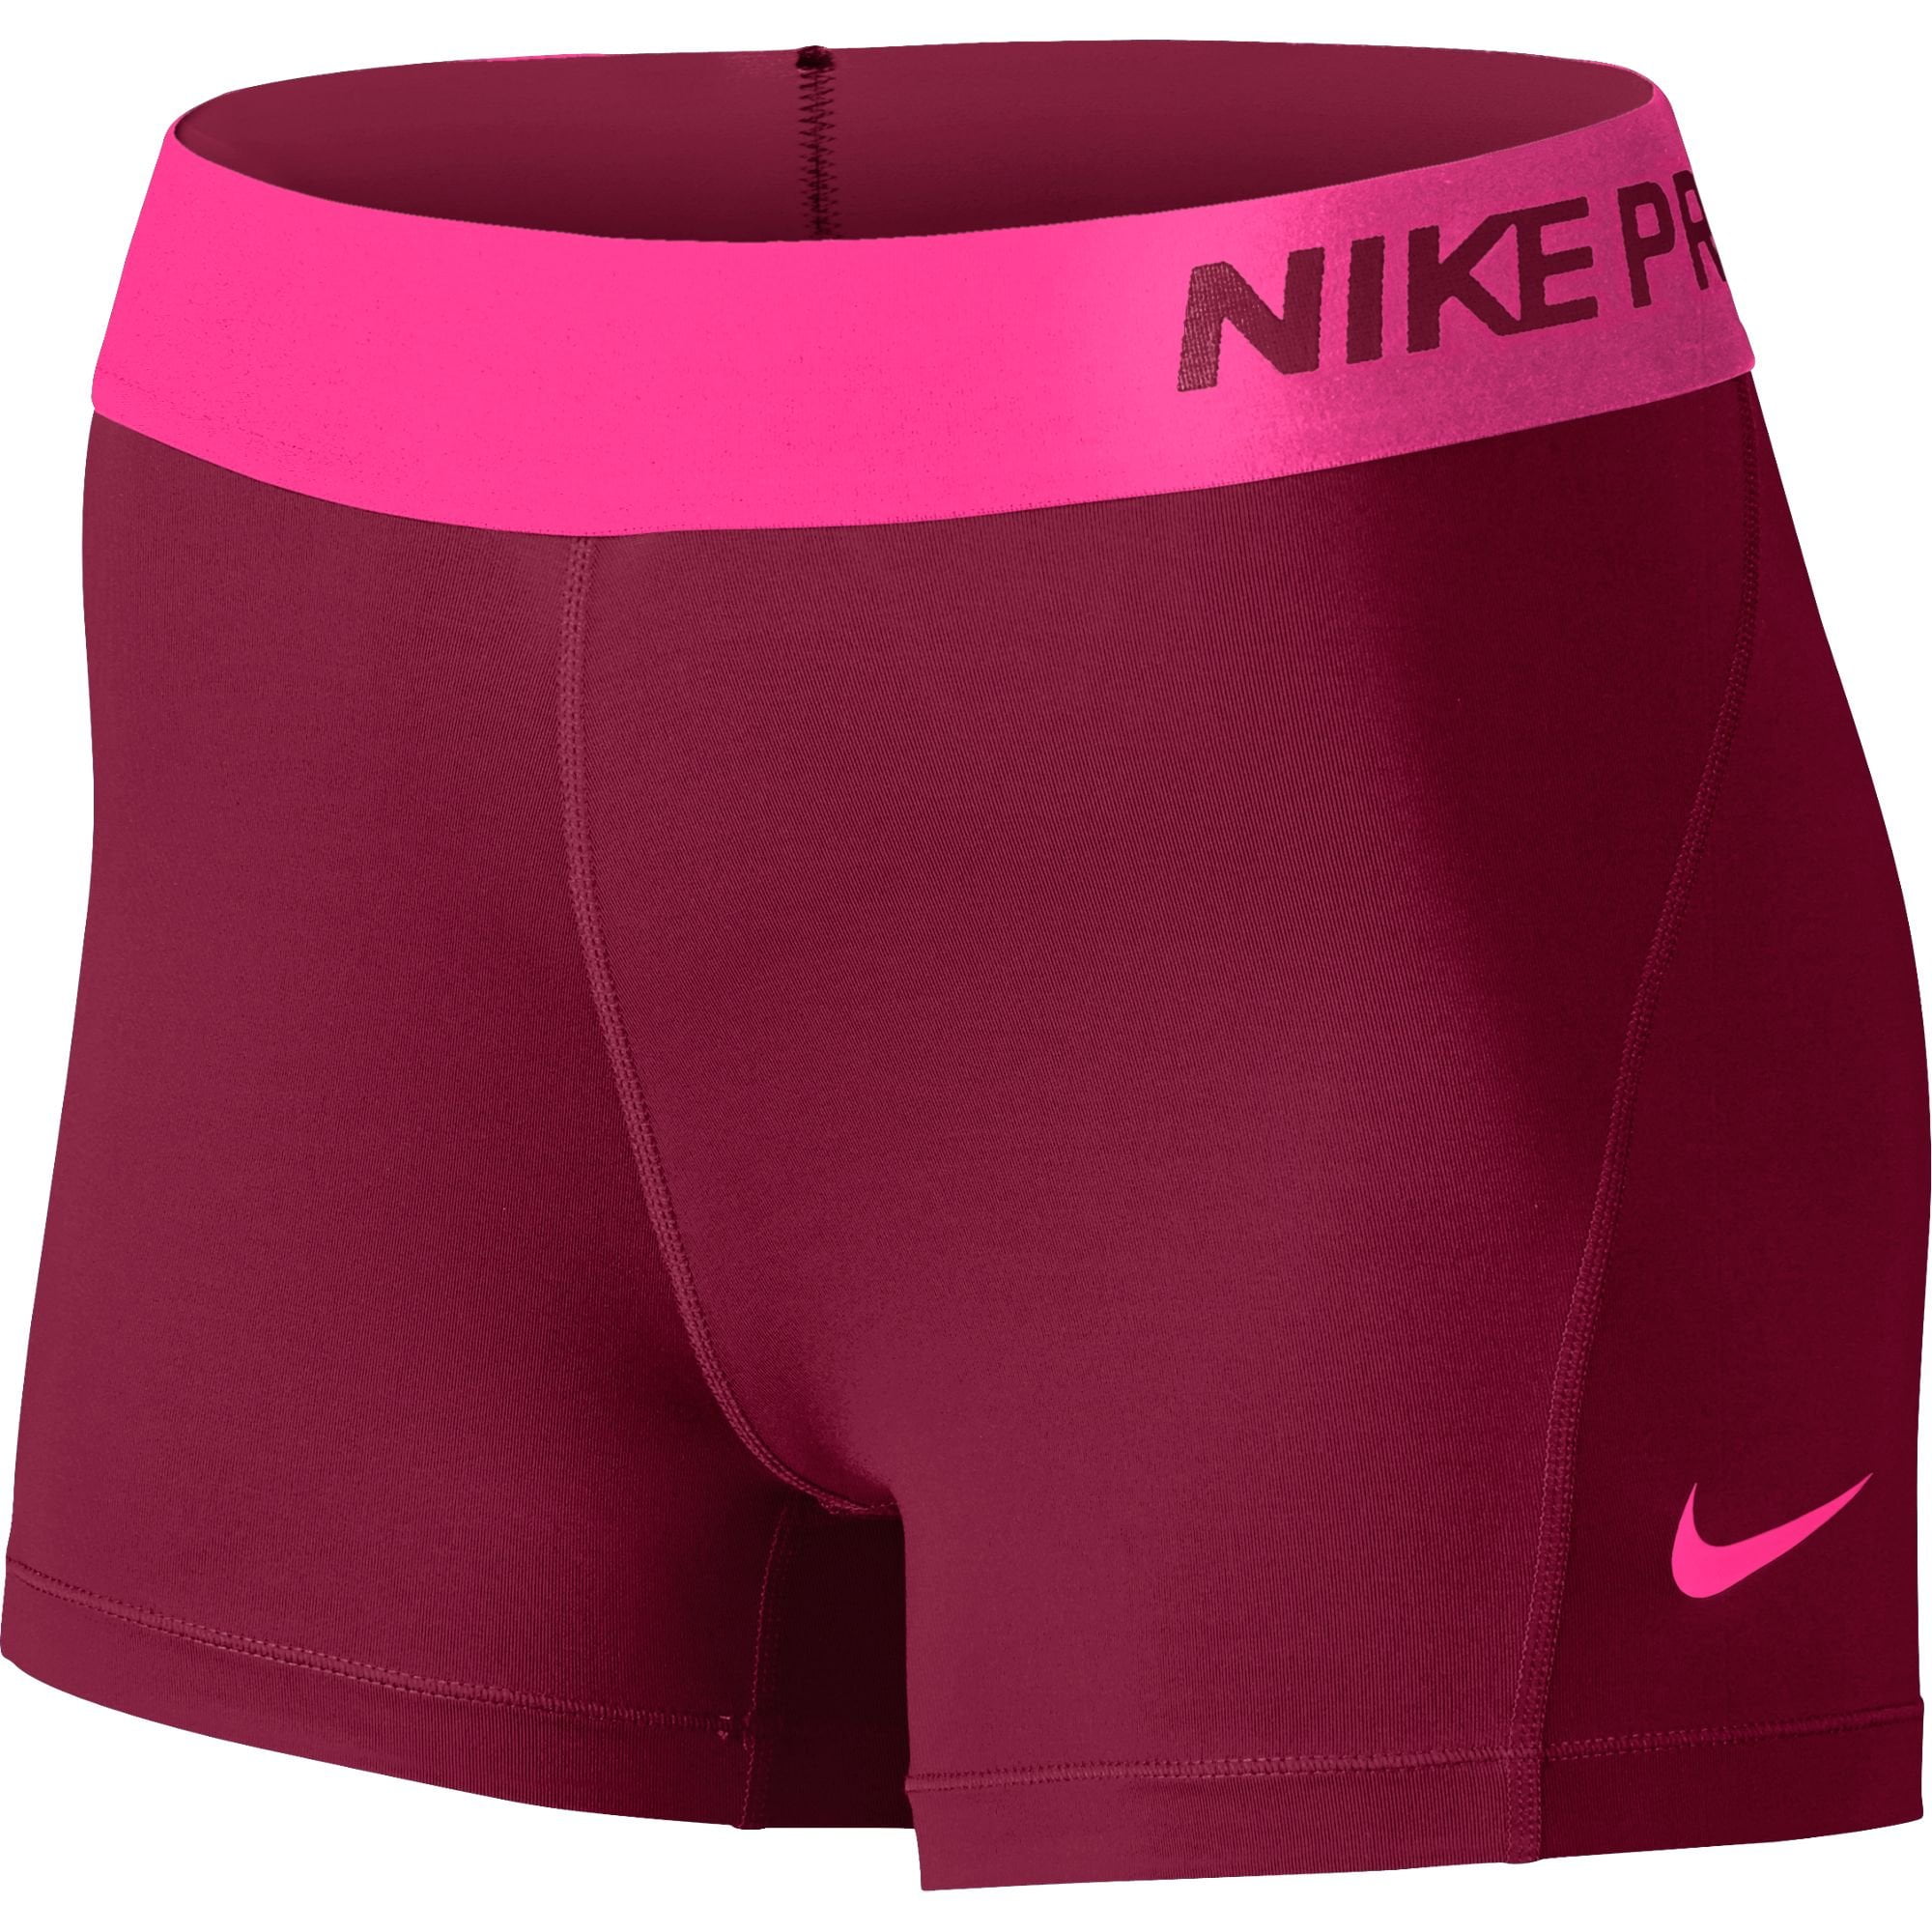 Reserveren segment Meetbaar Nike Pro Cool 3" Compression Short (Noble Red/Hyper Pink/Hyper Pink,  X-Large) - Walmart.com